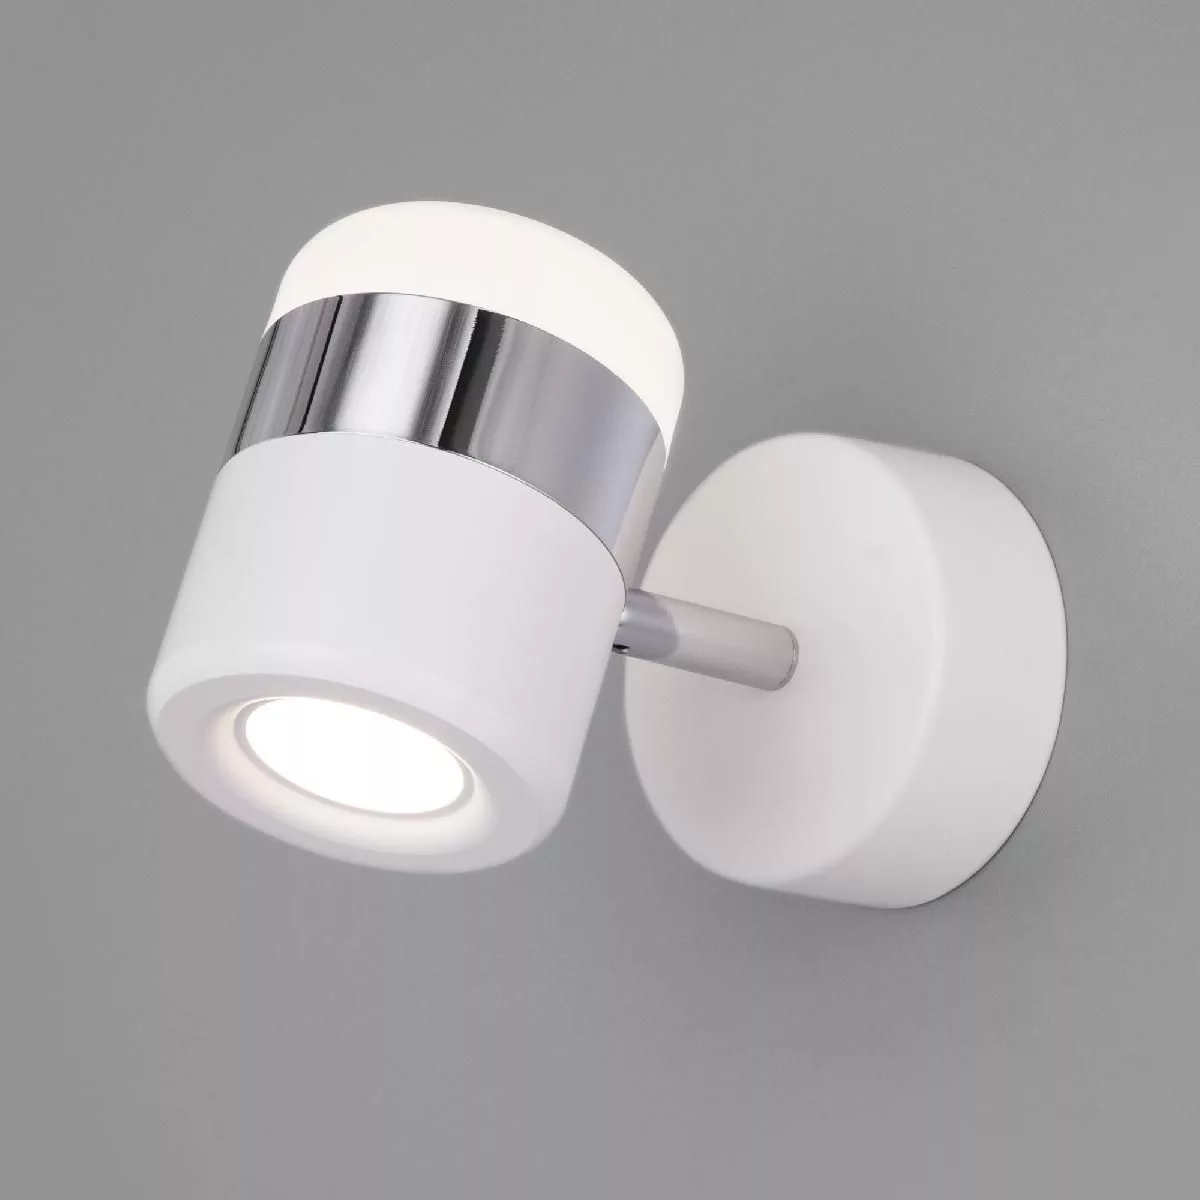 Настенный светильник Eurosvet хром / белый 20165/1 LED